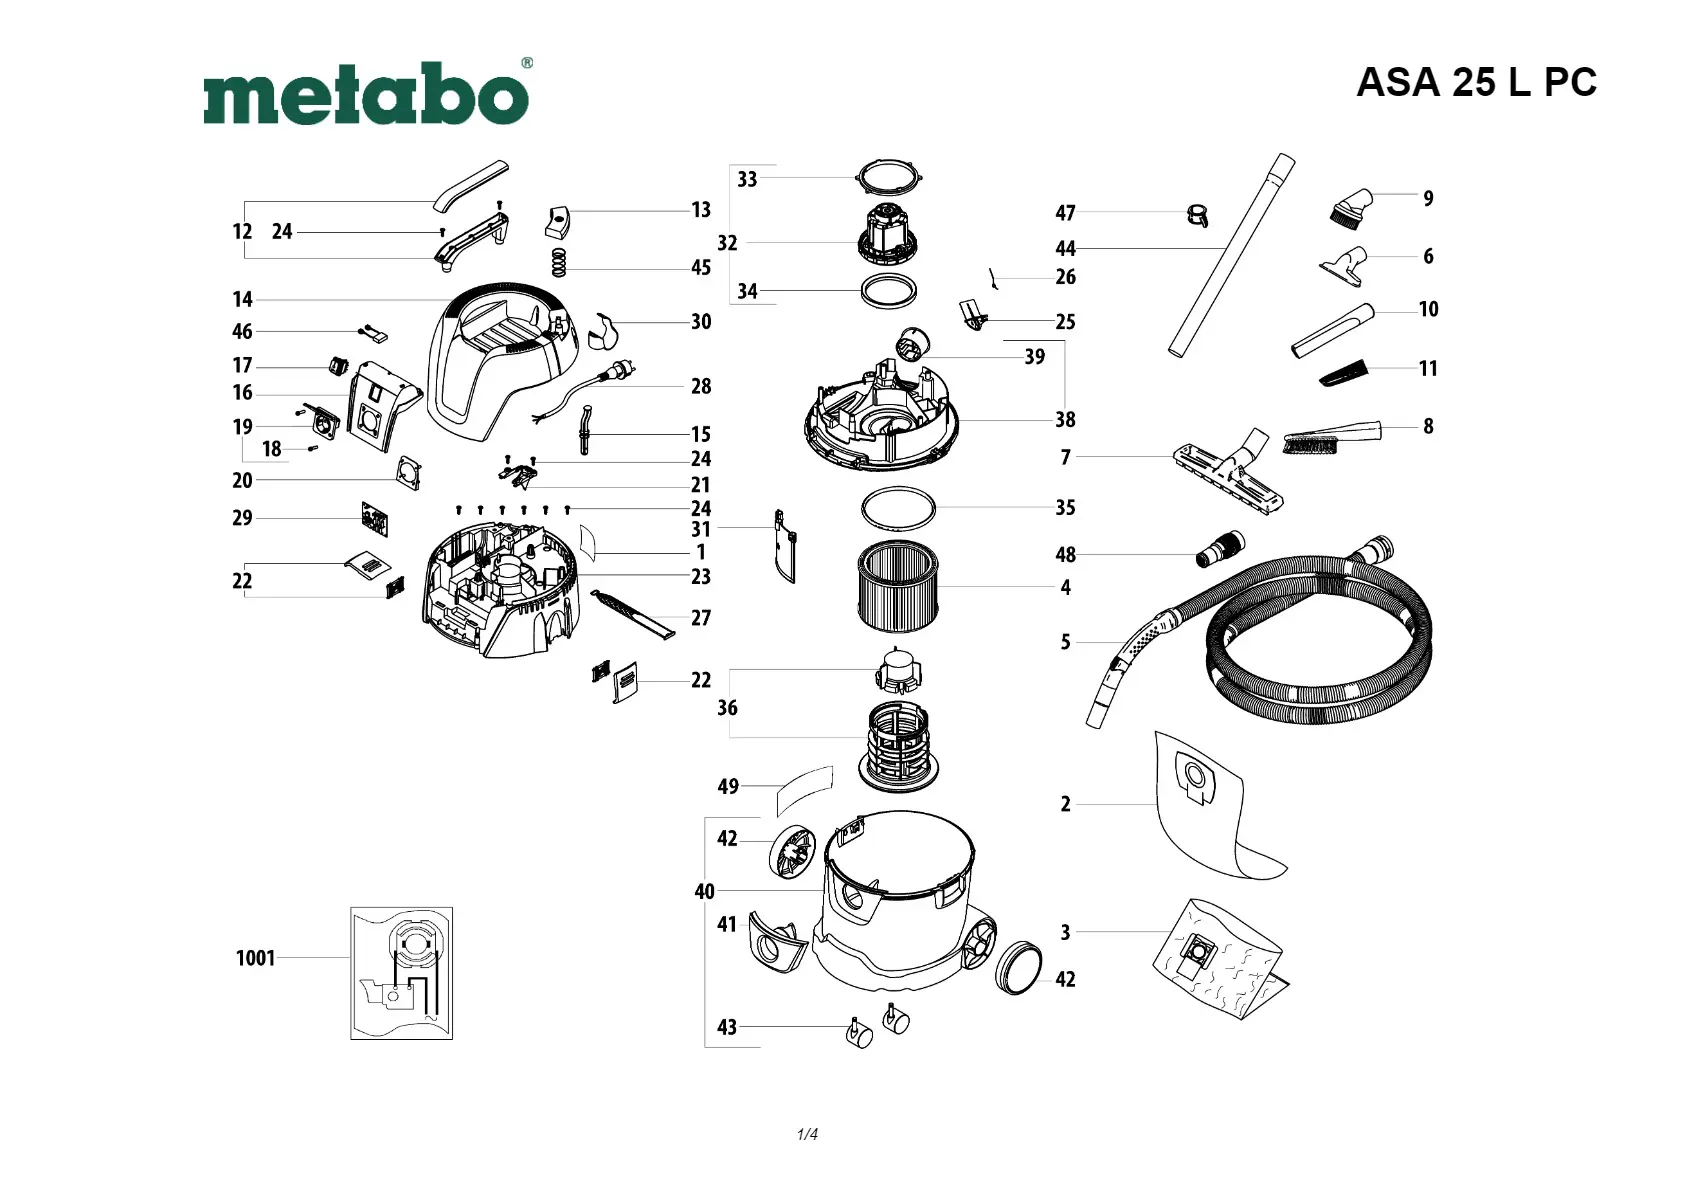 Metabo Auto-start device